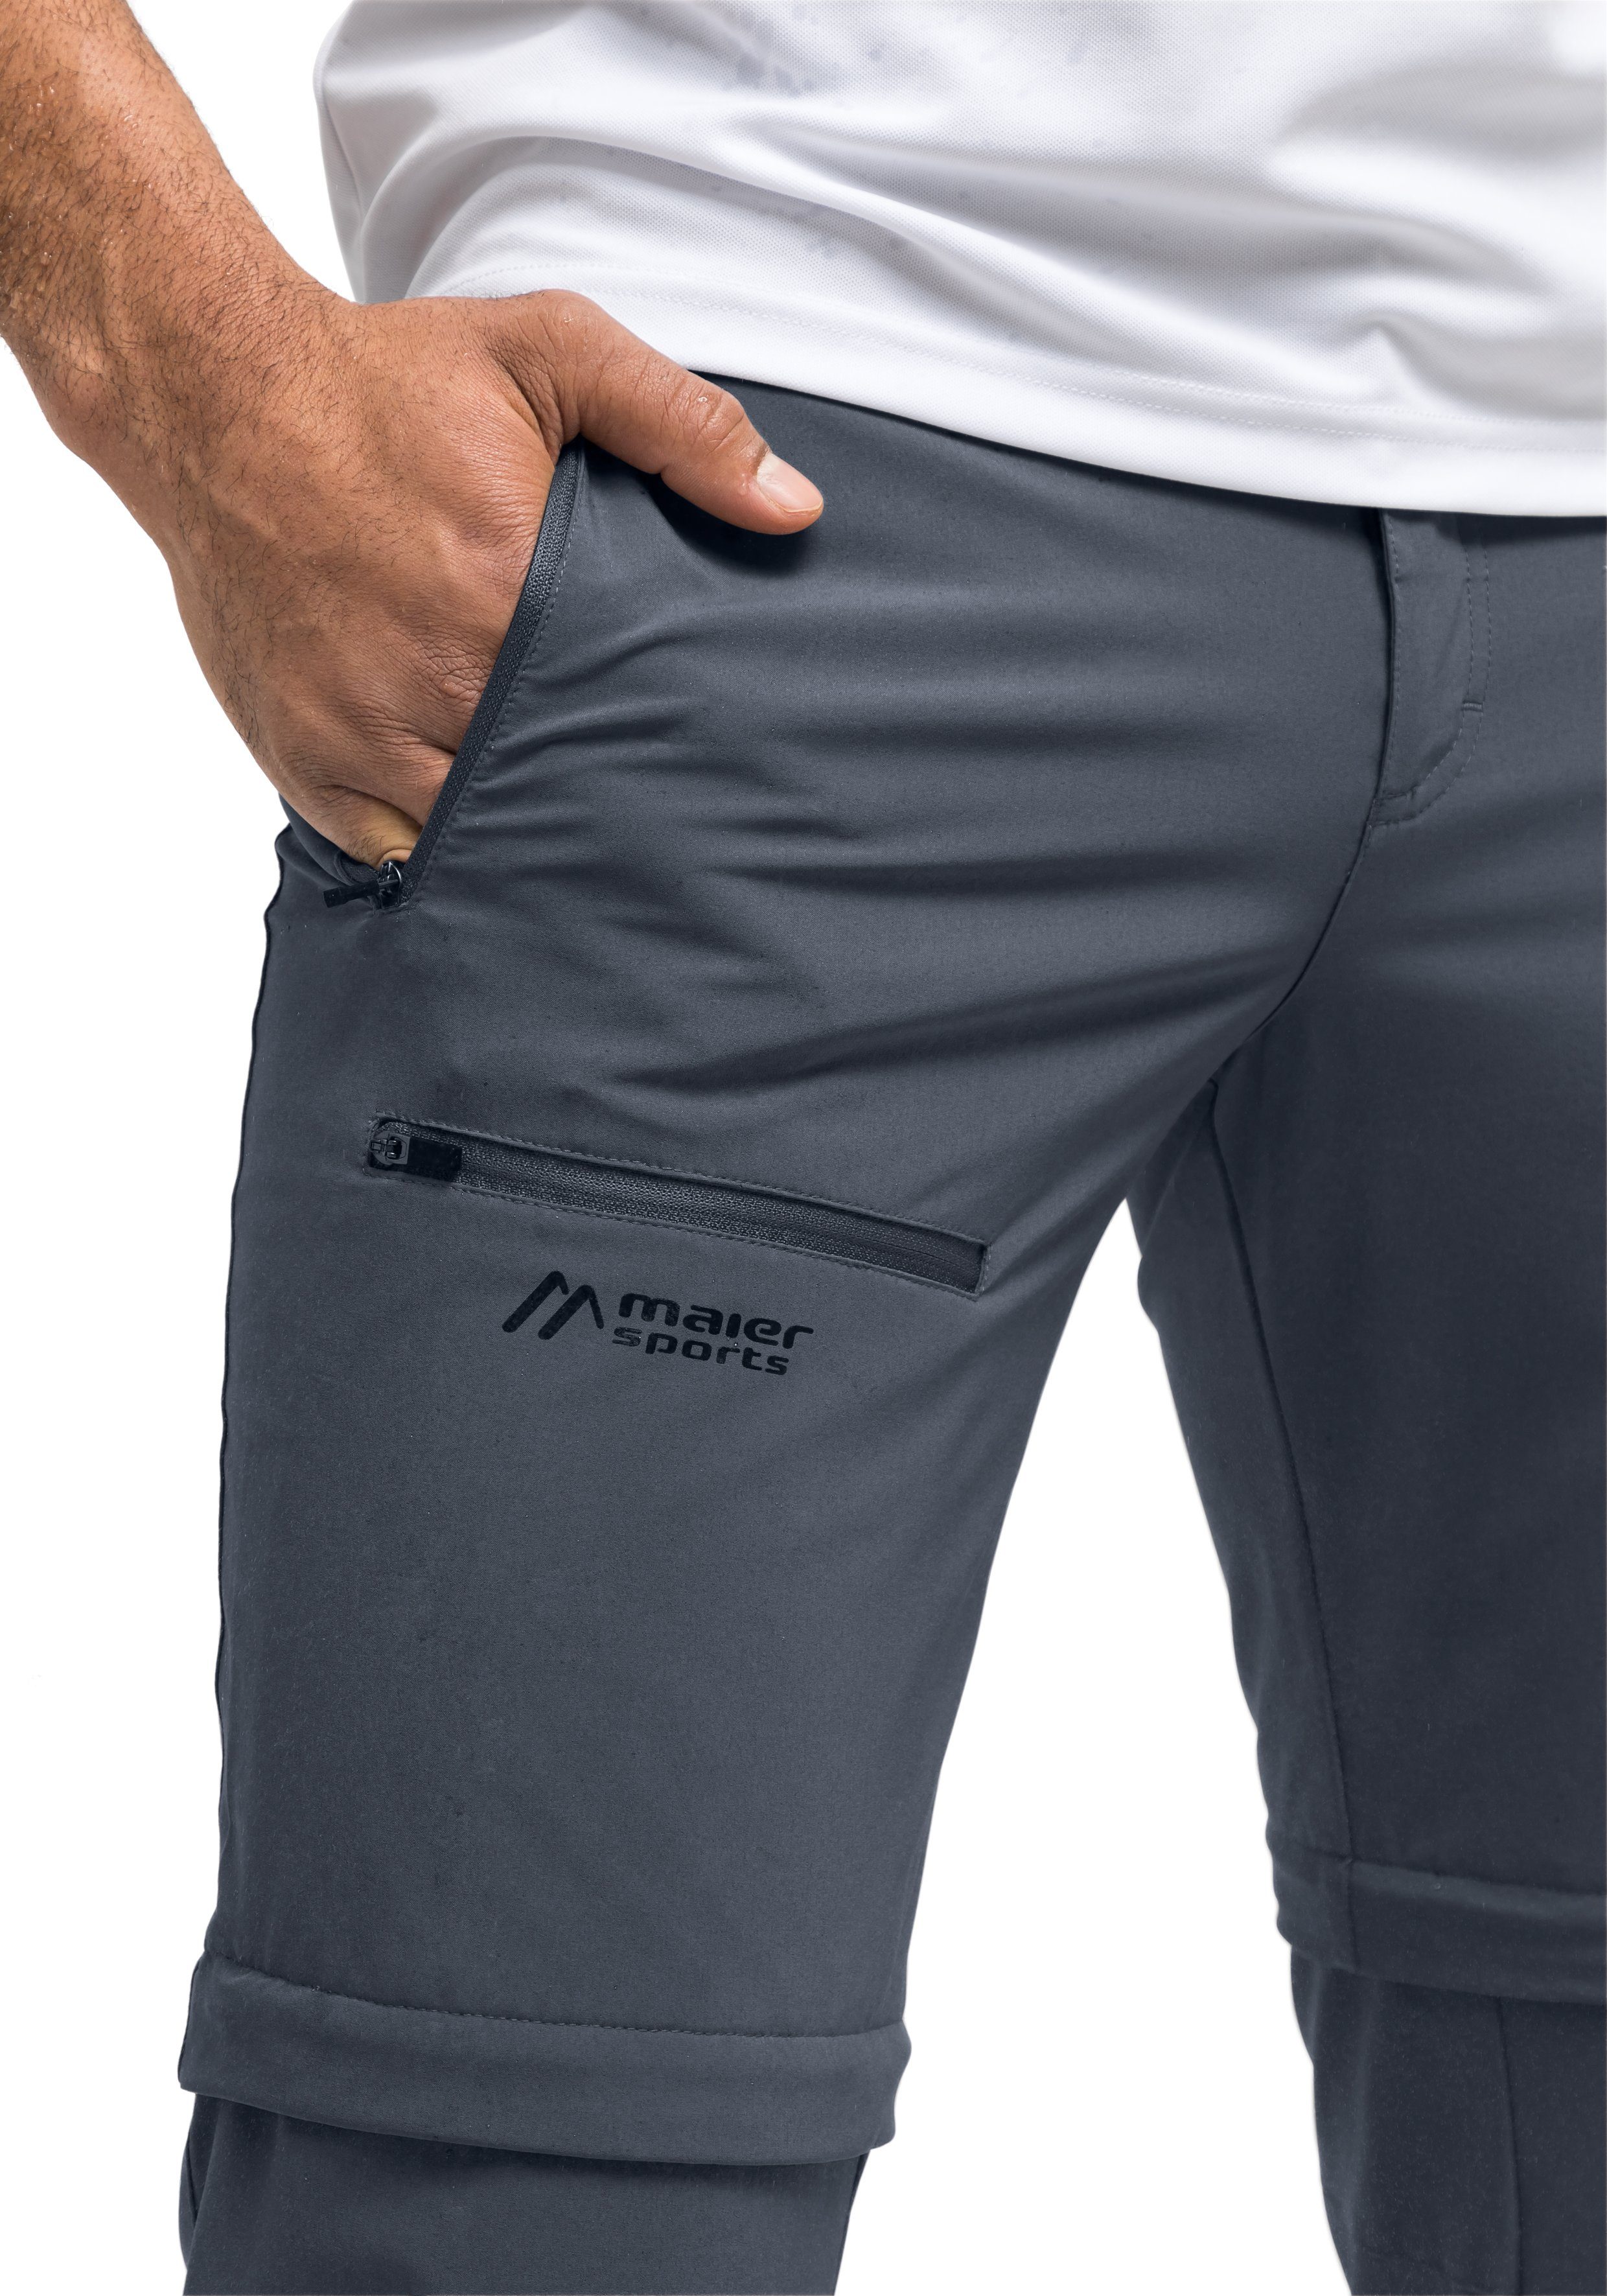 M Material Maier grau Sports flexiblem Zip Outdoorhose und aus Funktionshose Latit nachhaltigem